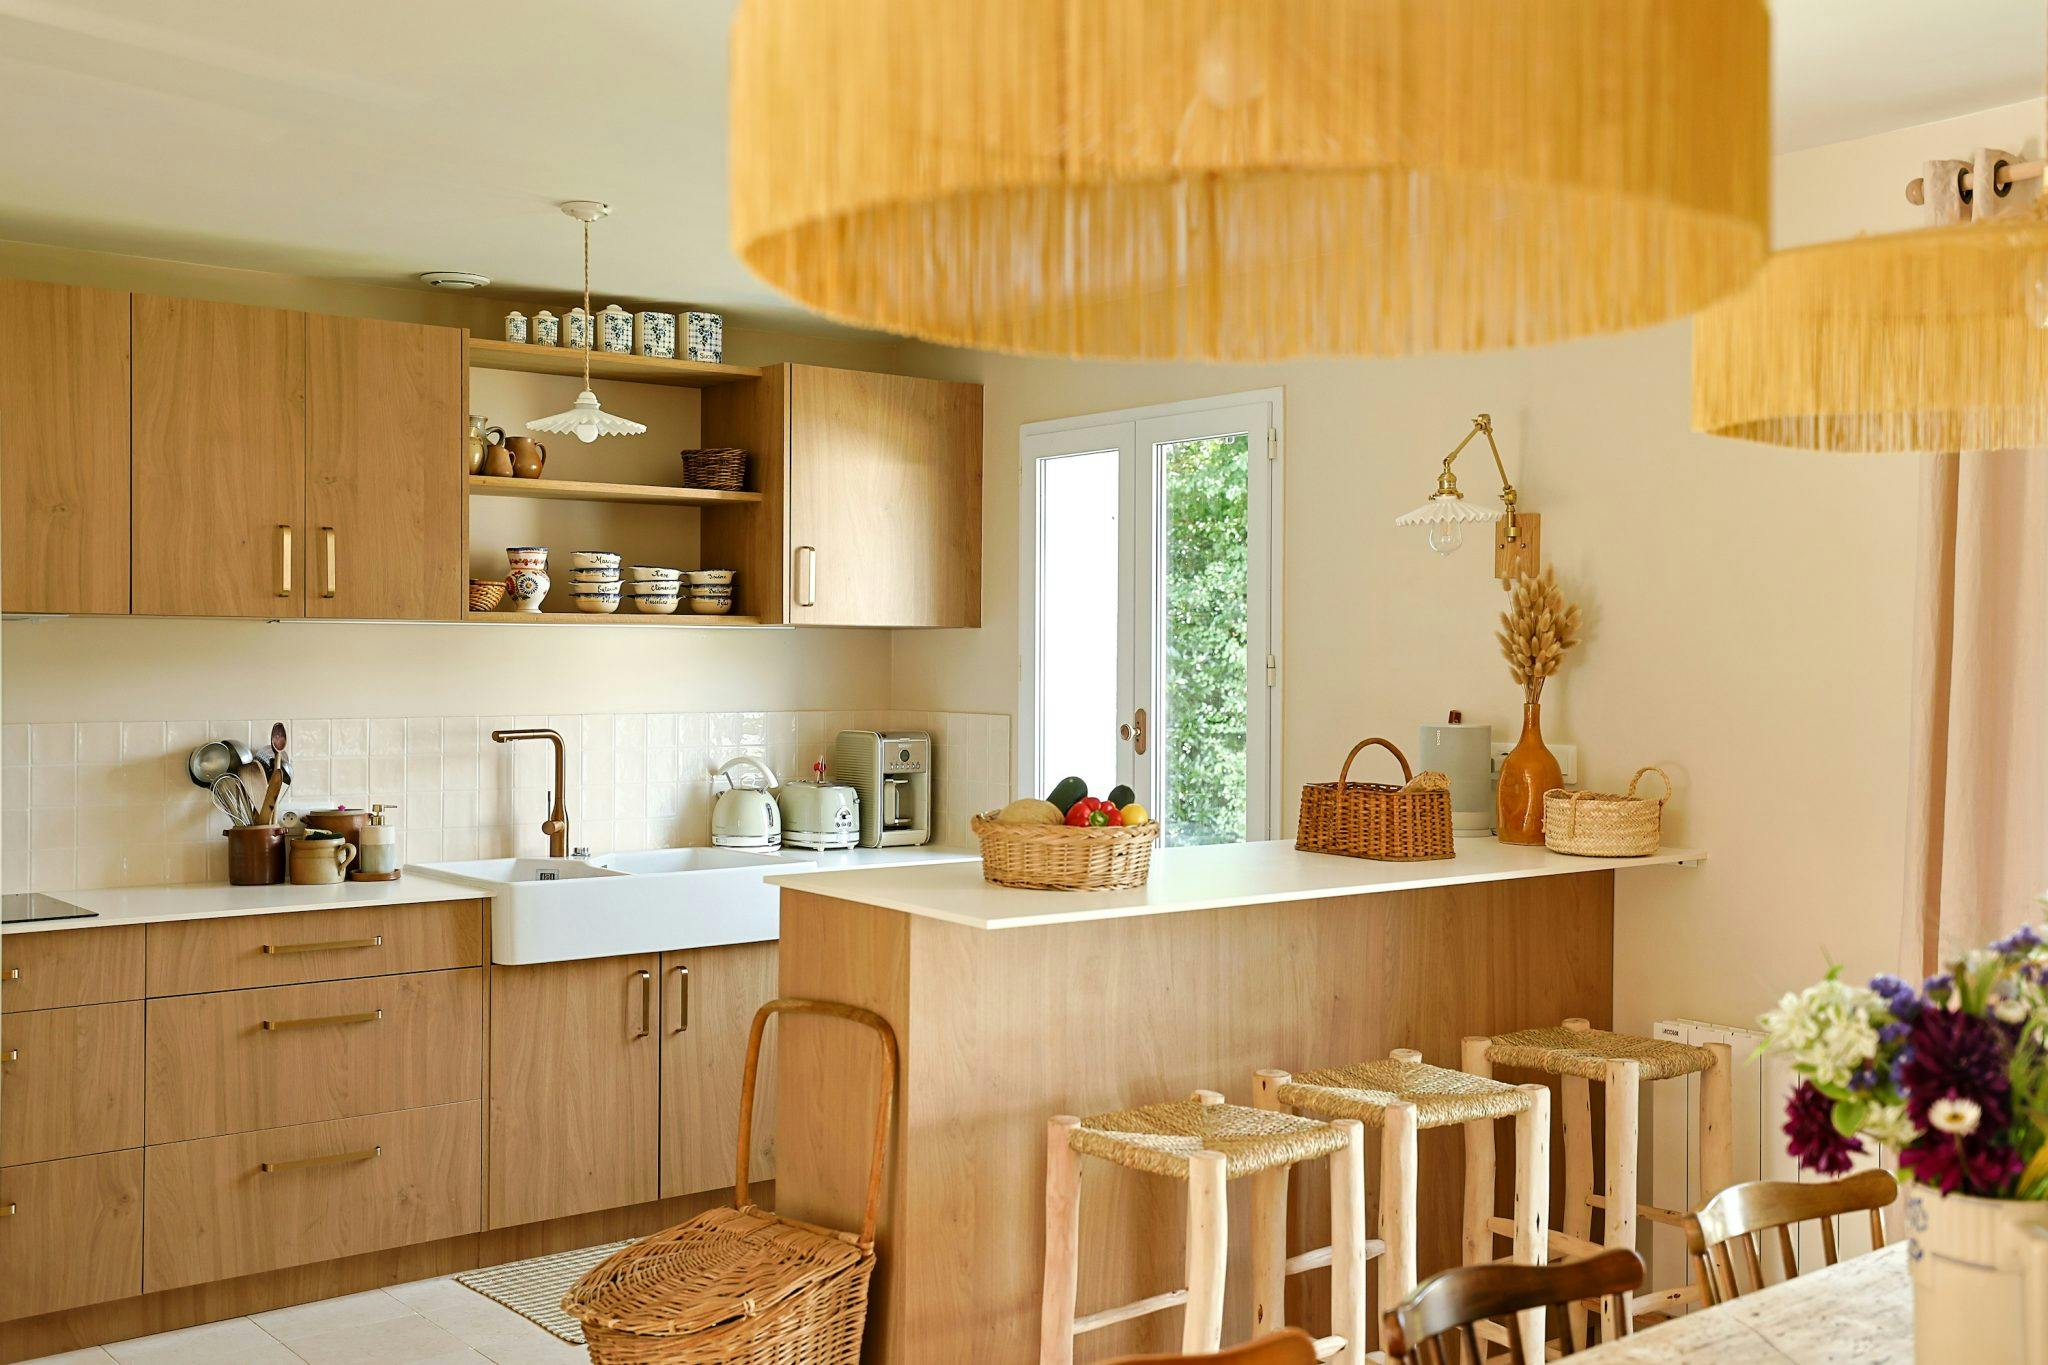 La Bien Aimée kitchen: modern and woody, bar and stools